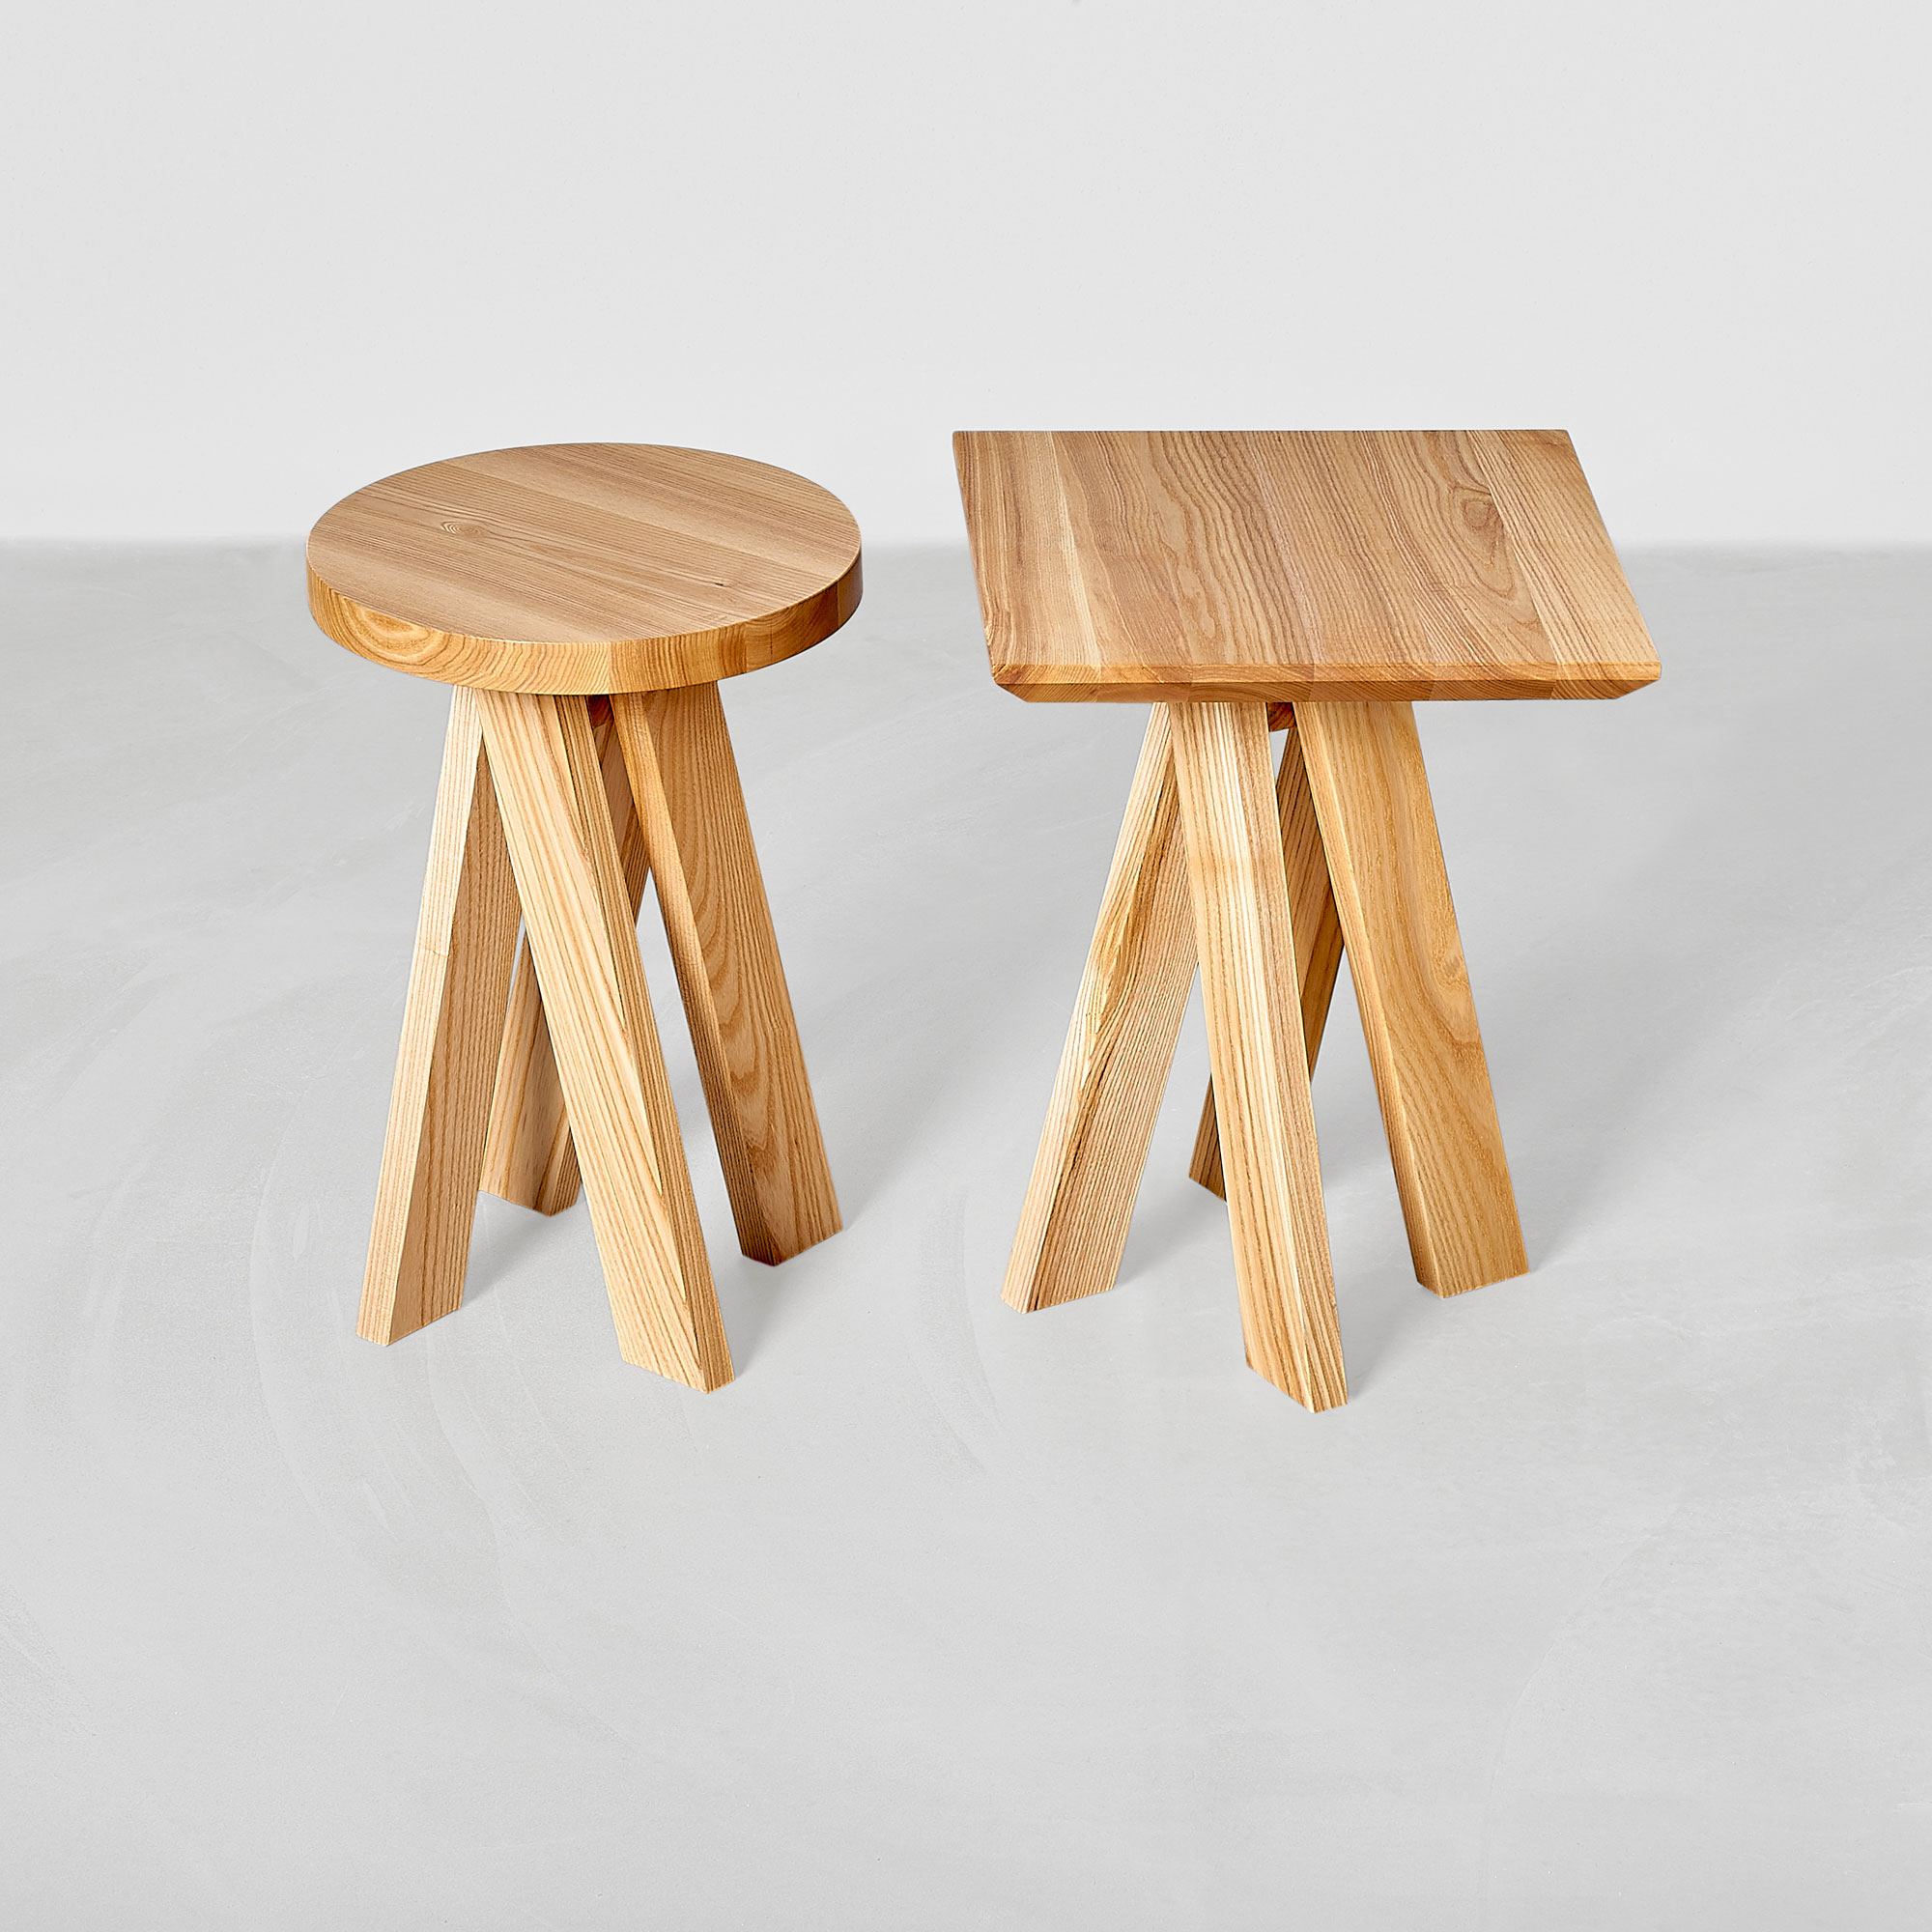 Designer Coffee Table ZIRKEL QG Zirkel4730 custom made in solid wood by vitamin design